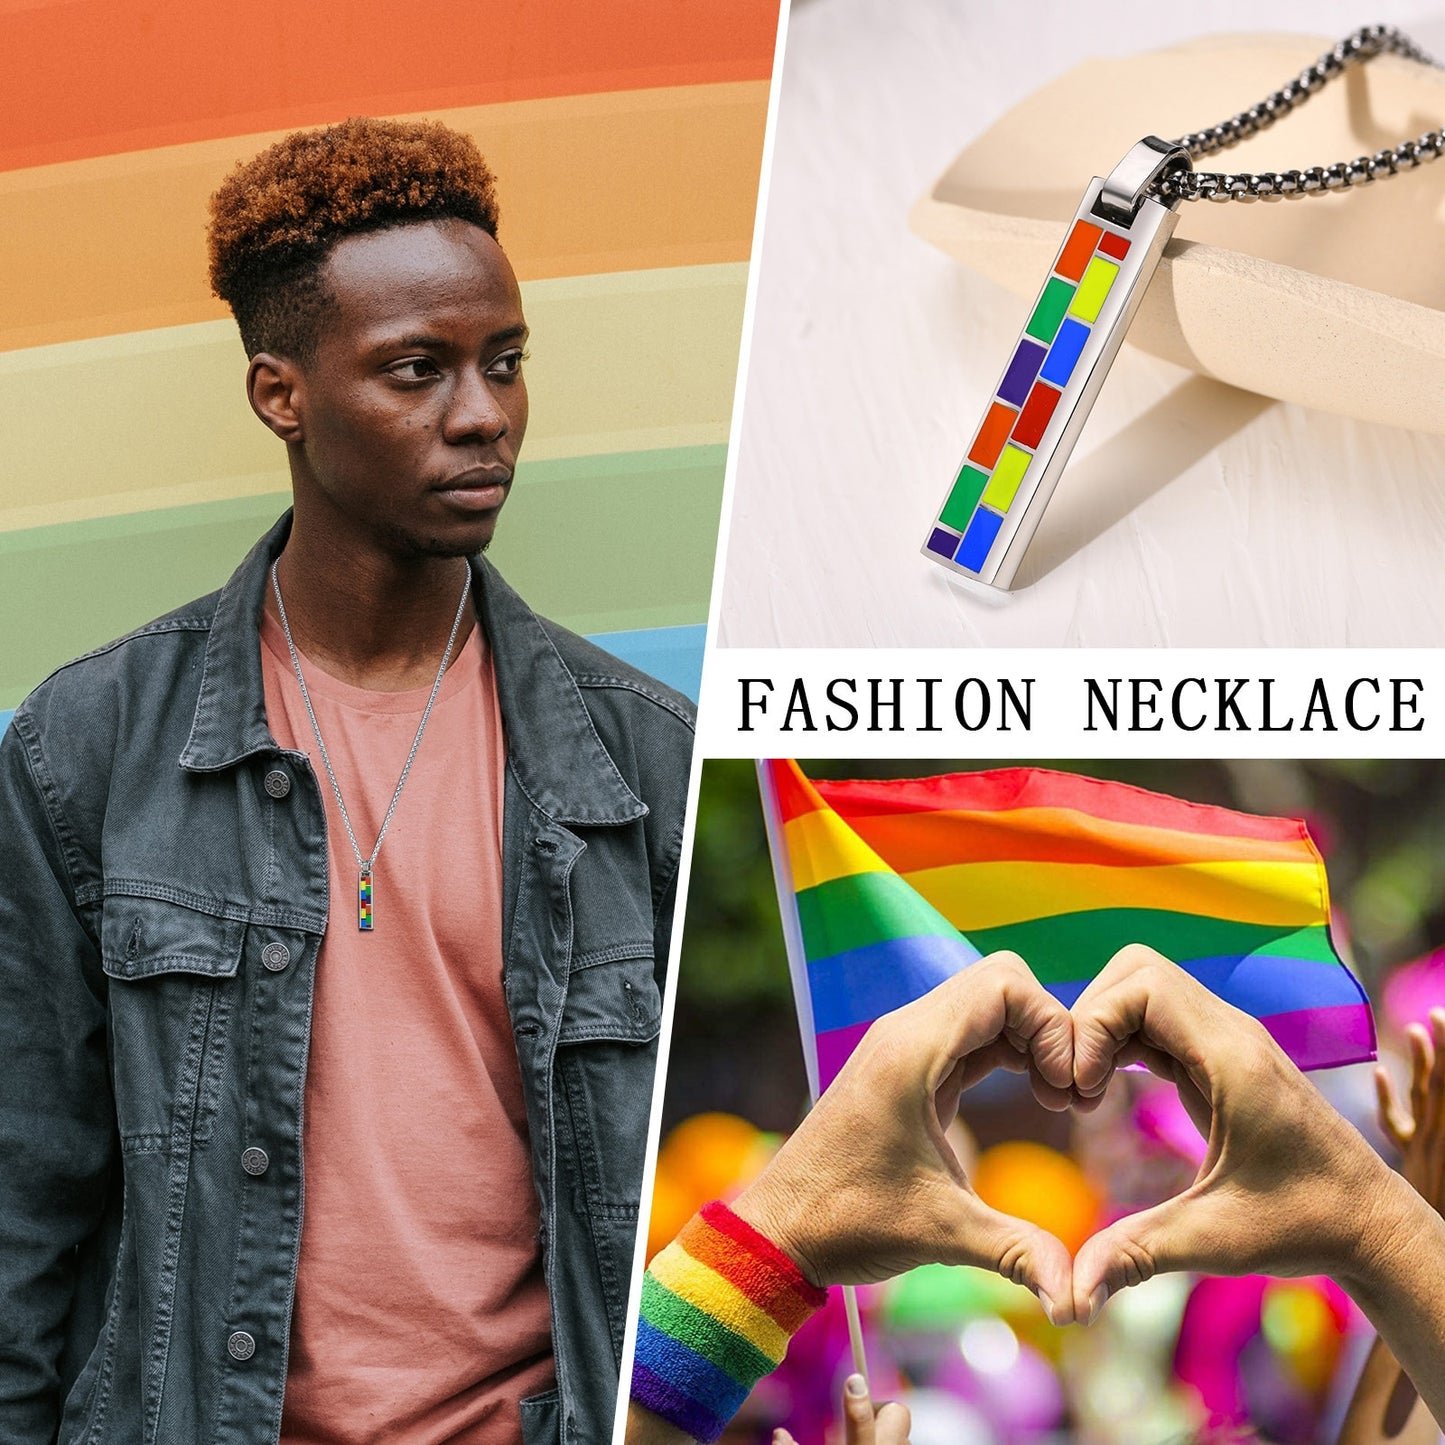 LGBTQ+ Pride Rainbow Bar Pendant Necklace Stainless Steel 45cm/50cm/55cm/60cm/70cm